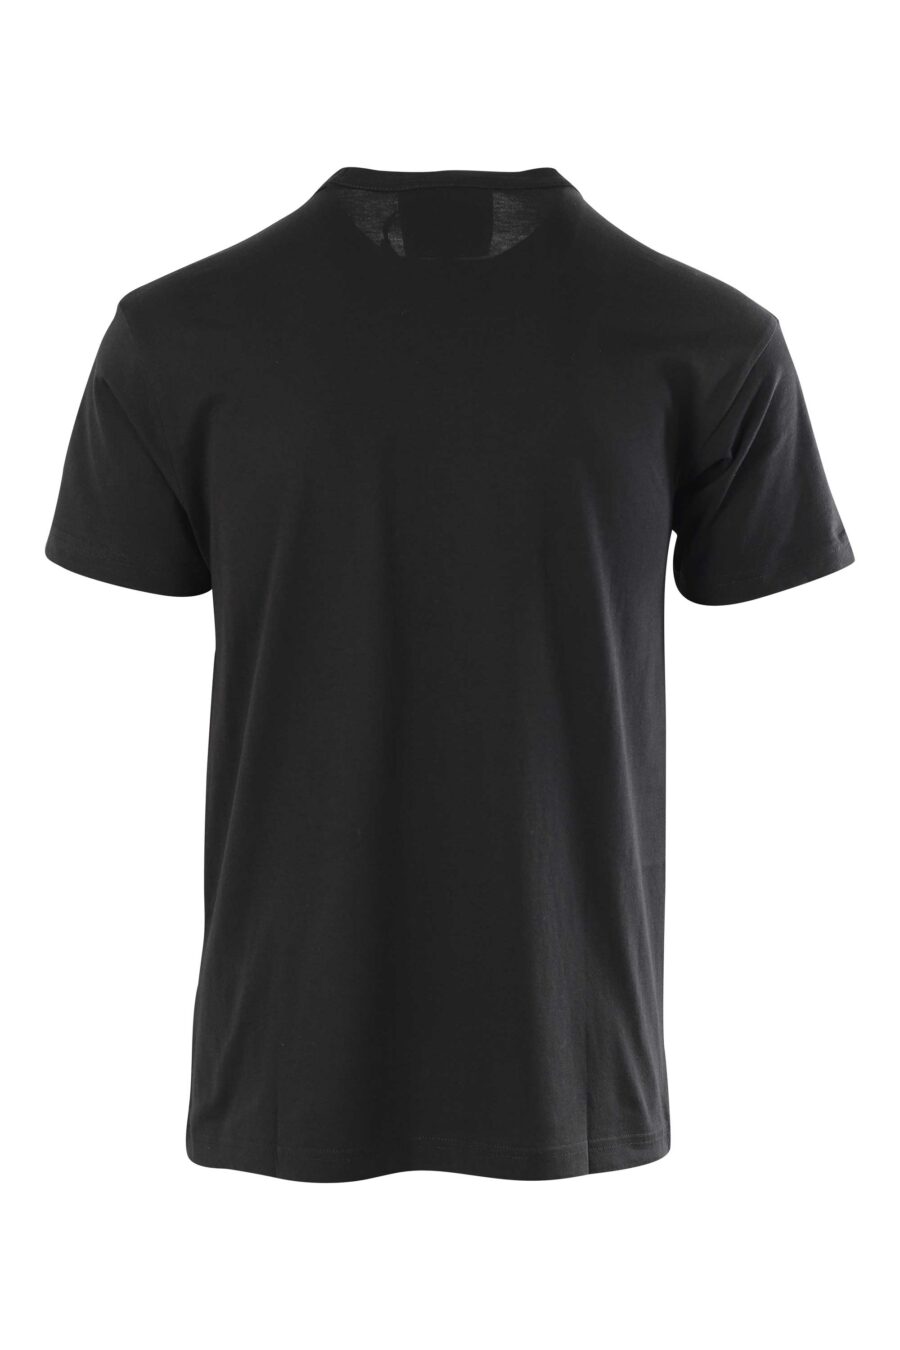 Schwarzes T-Shirt mit goldenem runden Maxilogo - 8052019325171 2